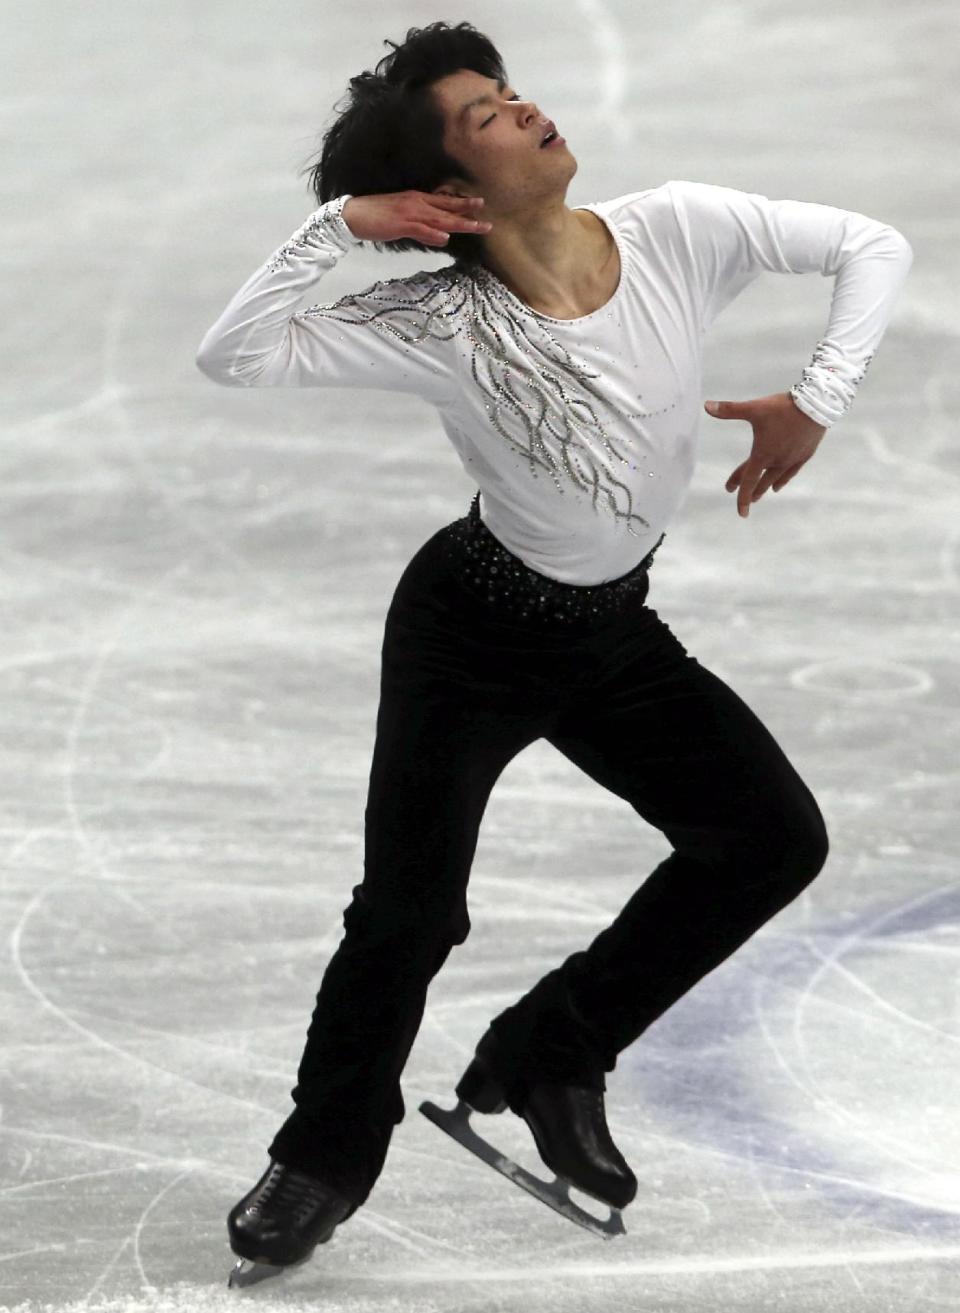 Tatsuki Machida of Japan performs during a men's short program of the World Figure Skating Championships in Saitama, near Tokyo, Wednesday, March 26, 2014. (AP Photo/Koji Sasahara)